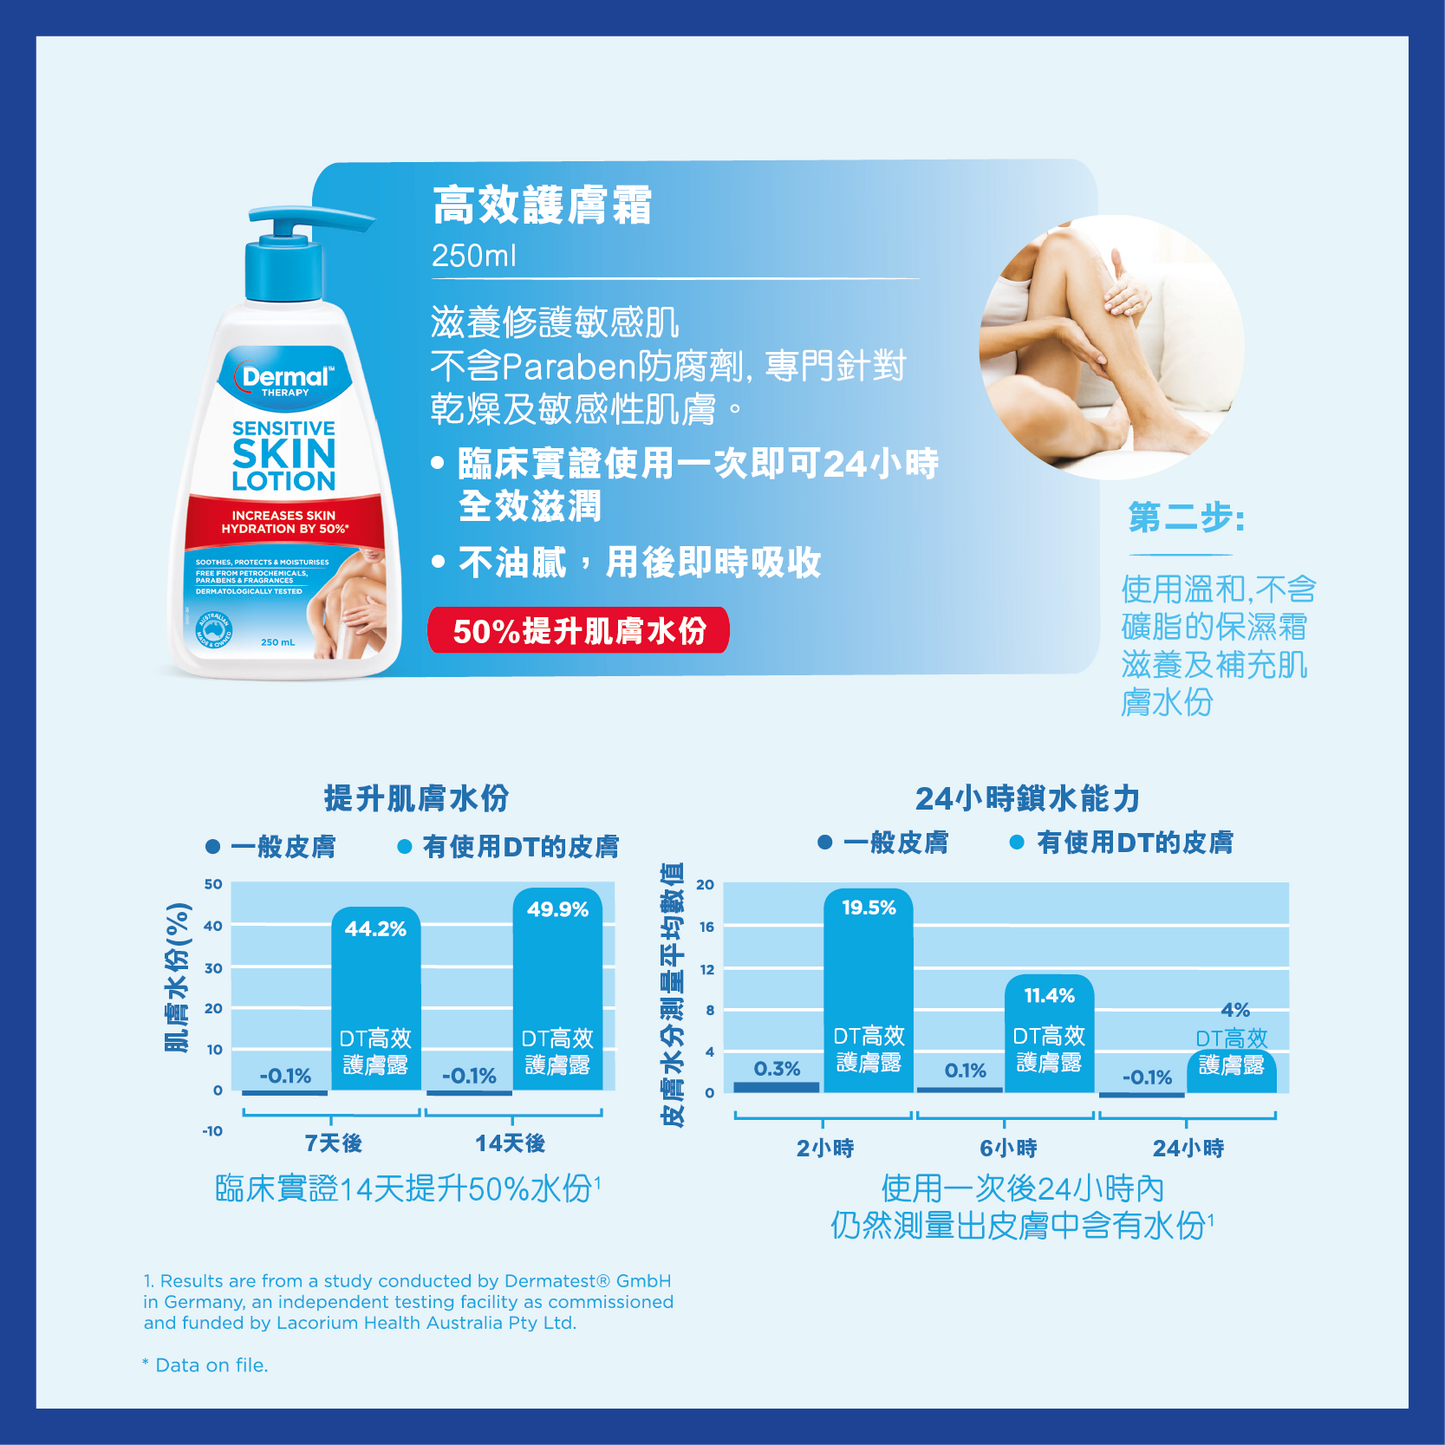 【Dermal Therapy】天然皮膚沐浴露 Sensitive Skin Wash 250ml